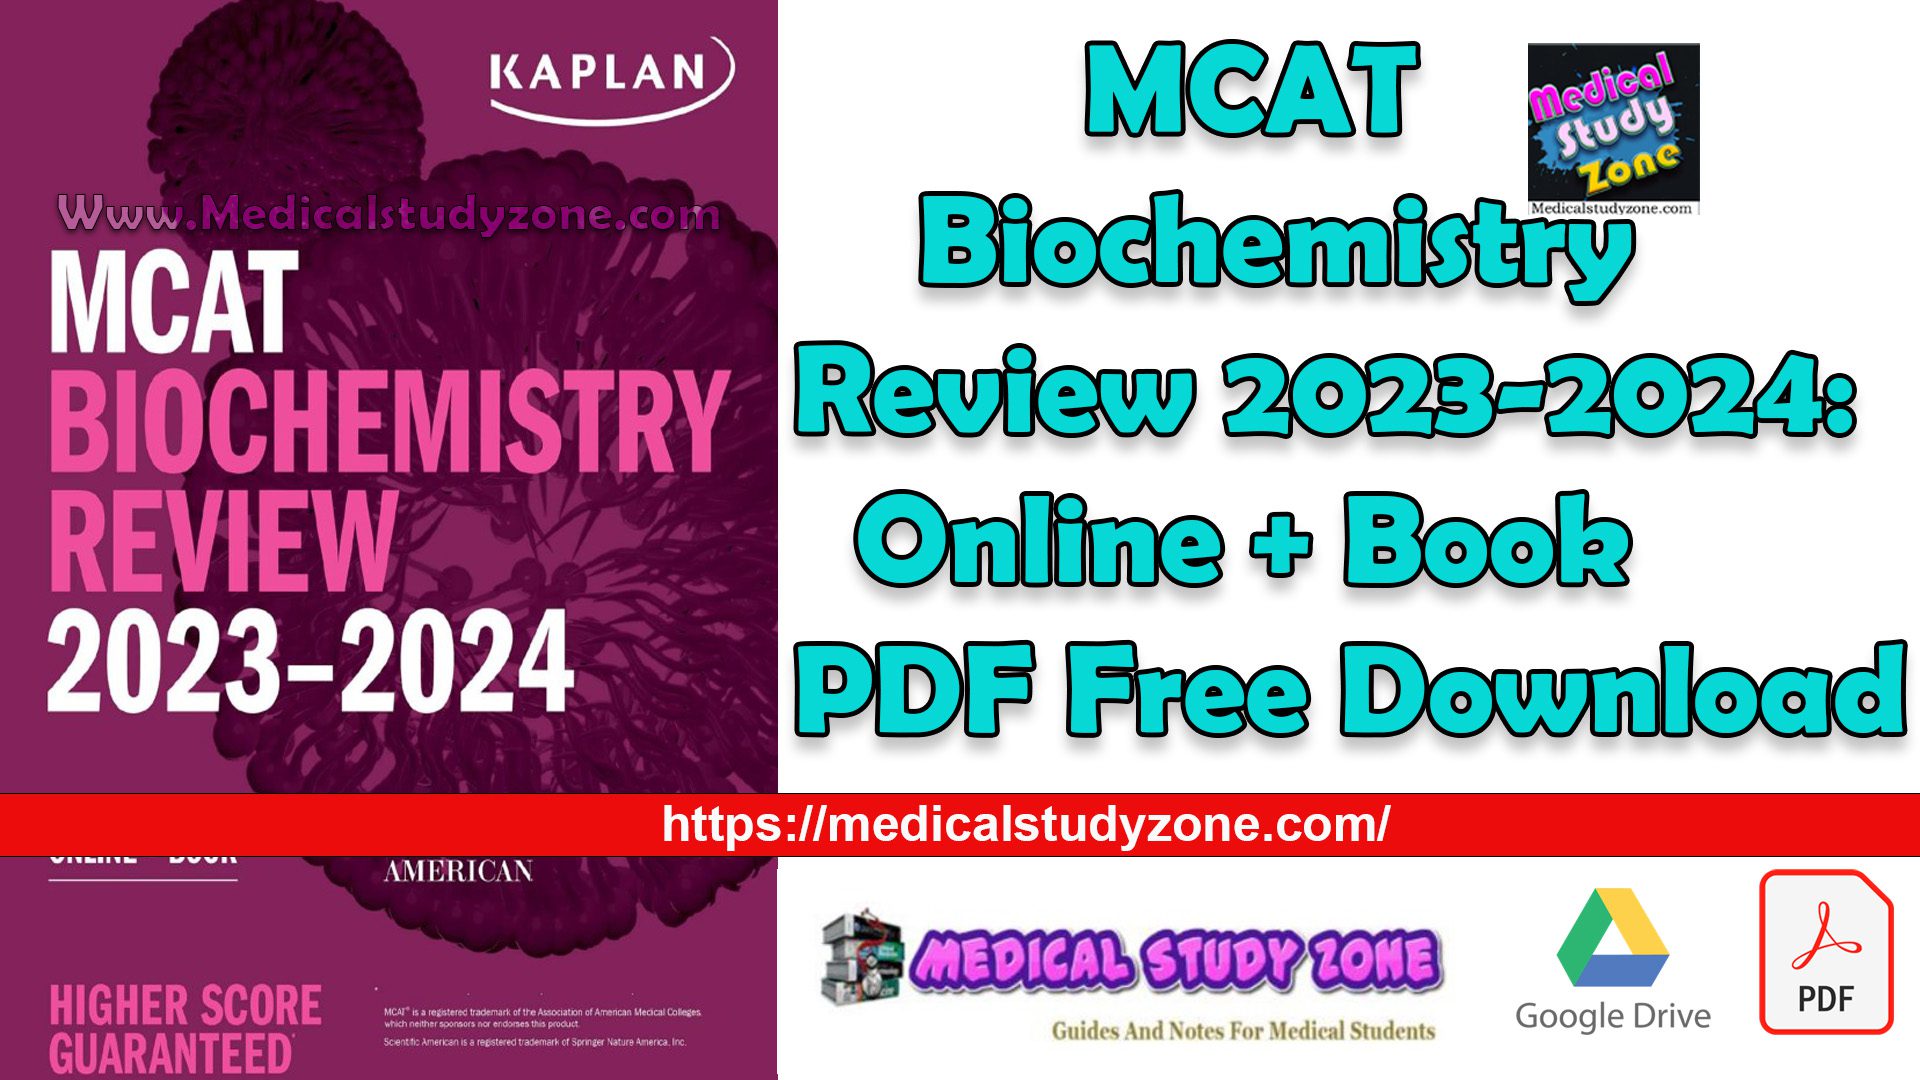 MCAT Biochemistry Review 2023-2024: Online + Book PDF Free Download